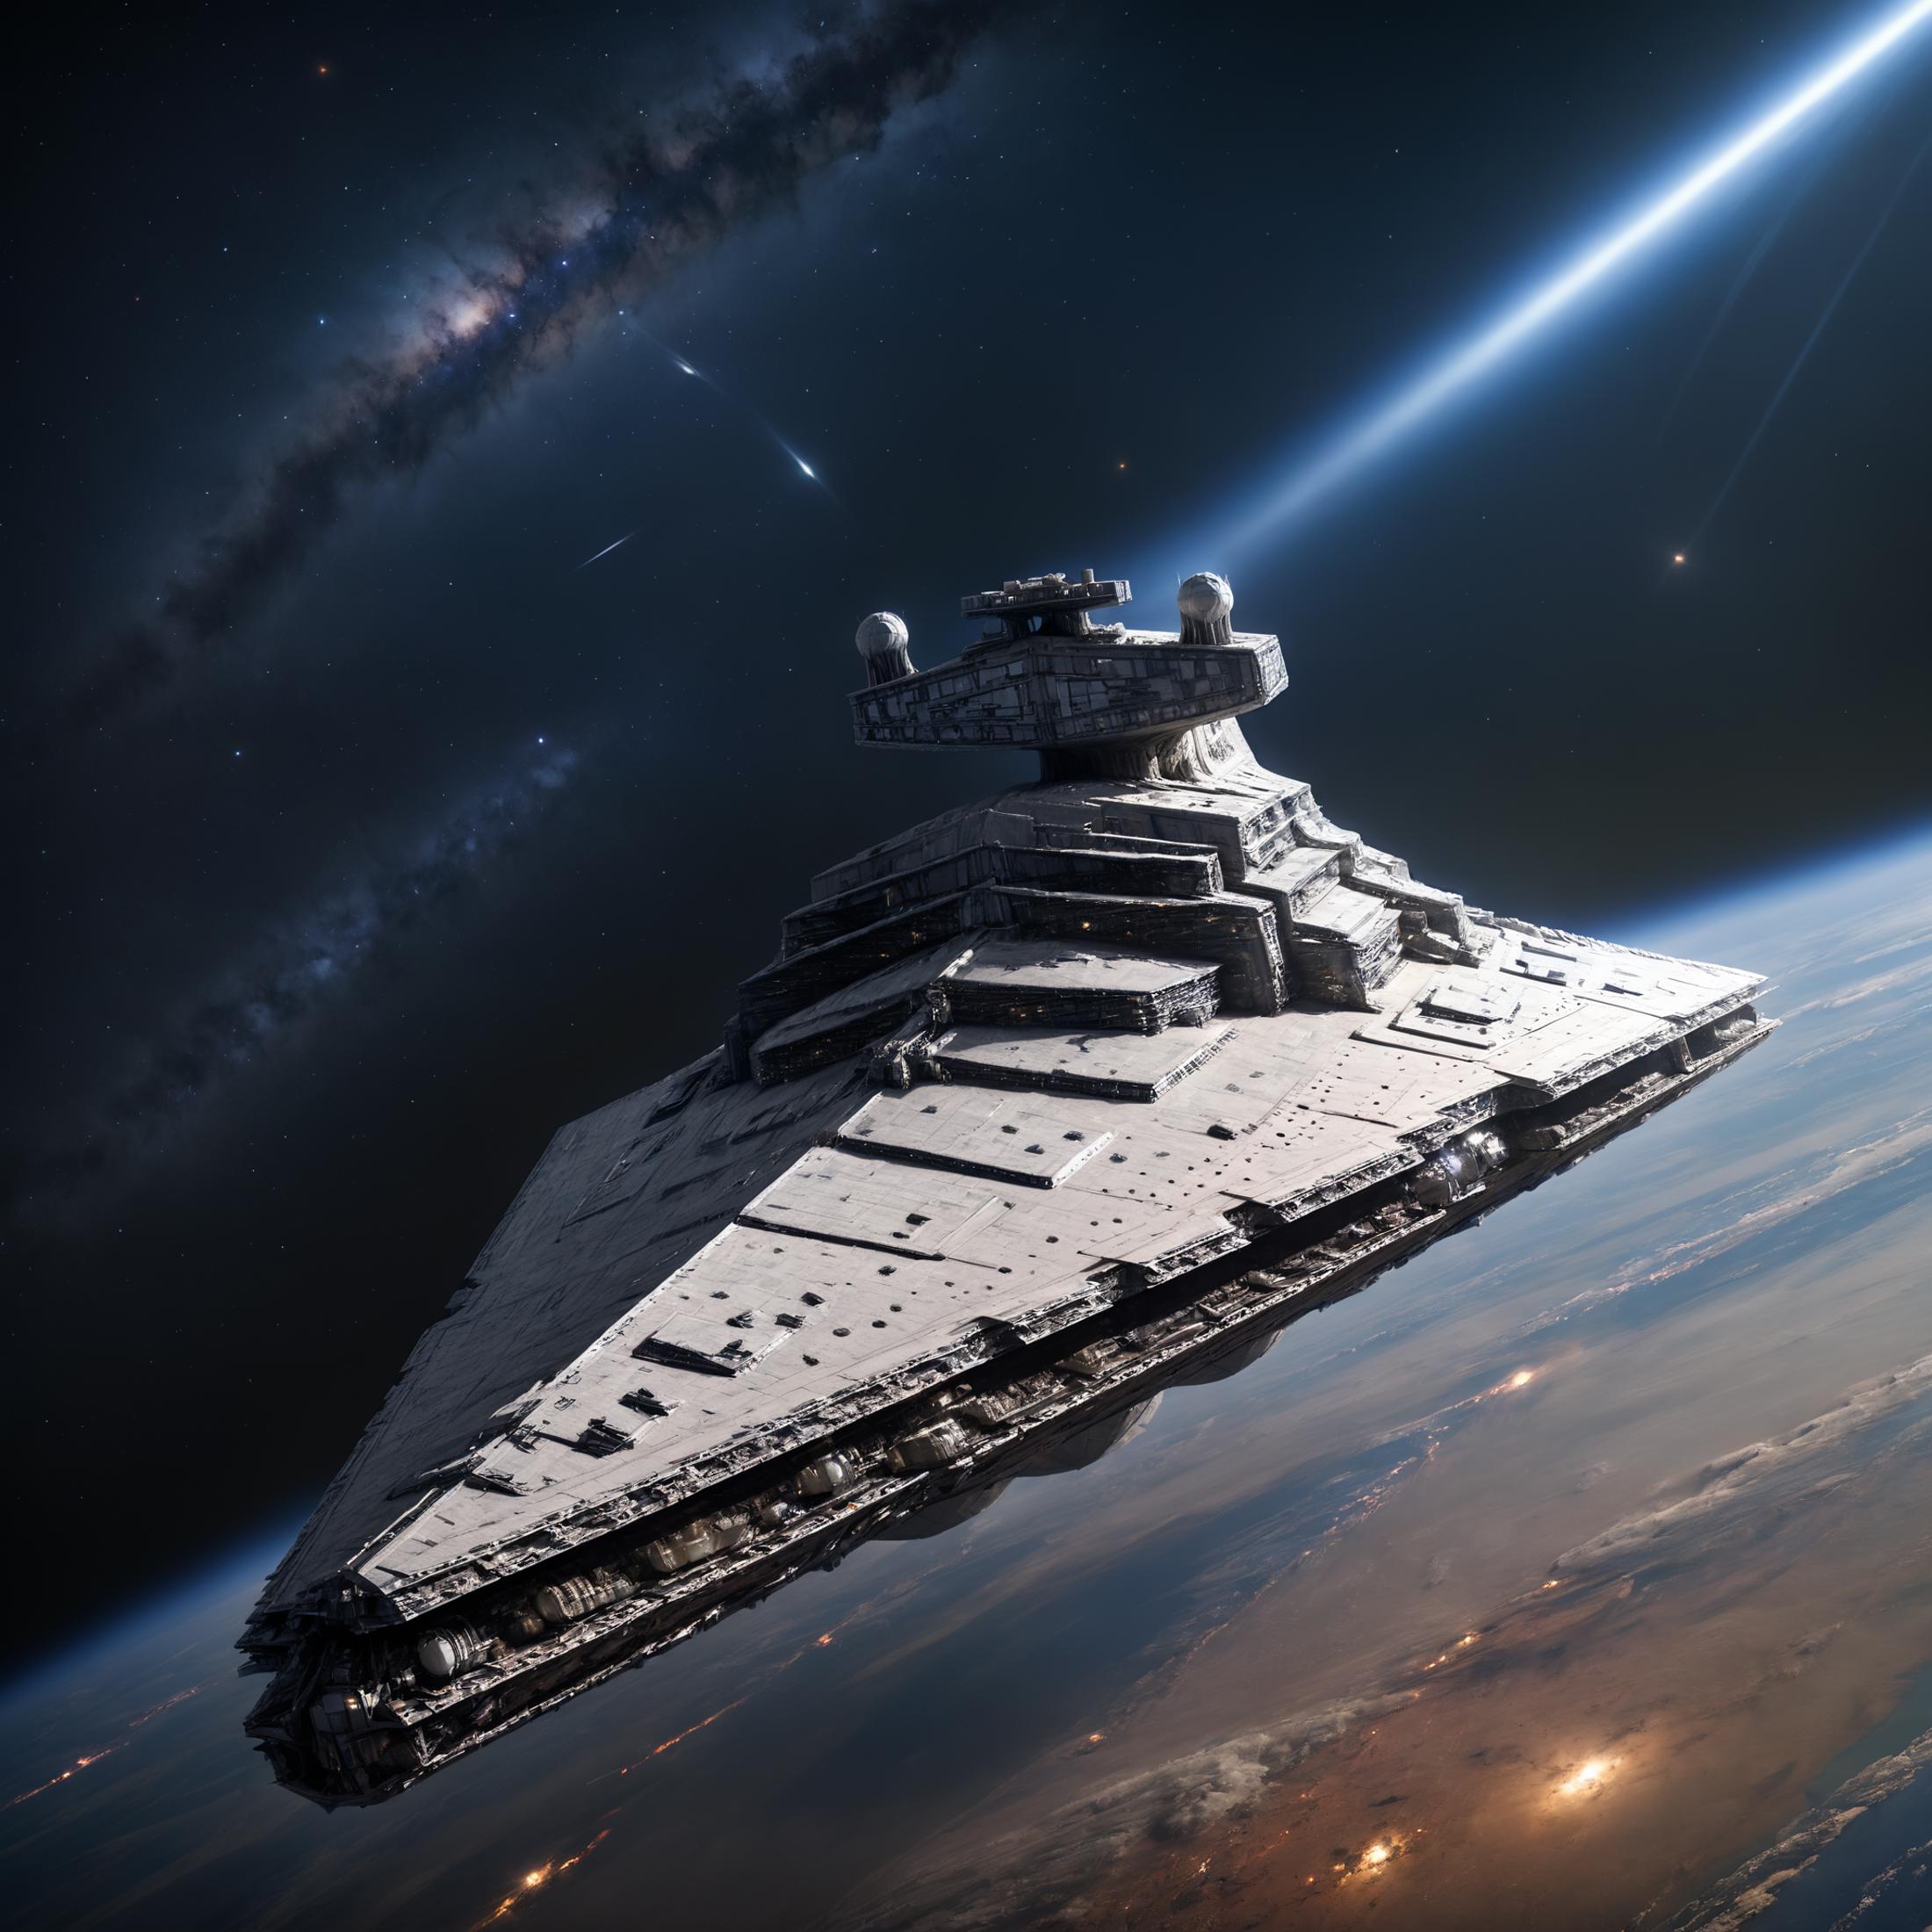 Star Destroyer SDXL (Star Wars) image by freek22